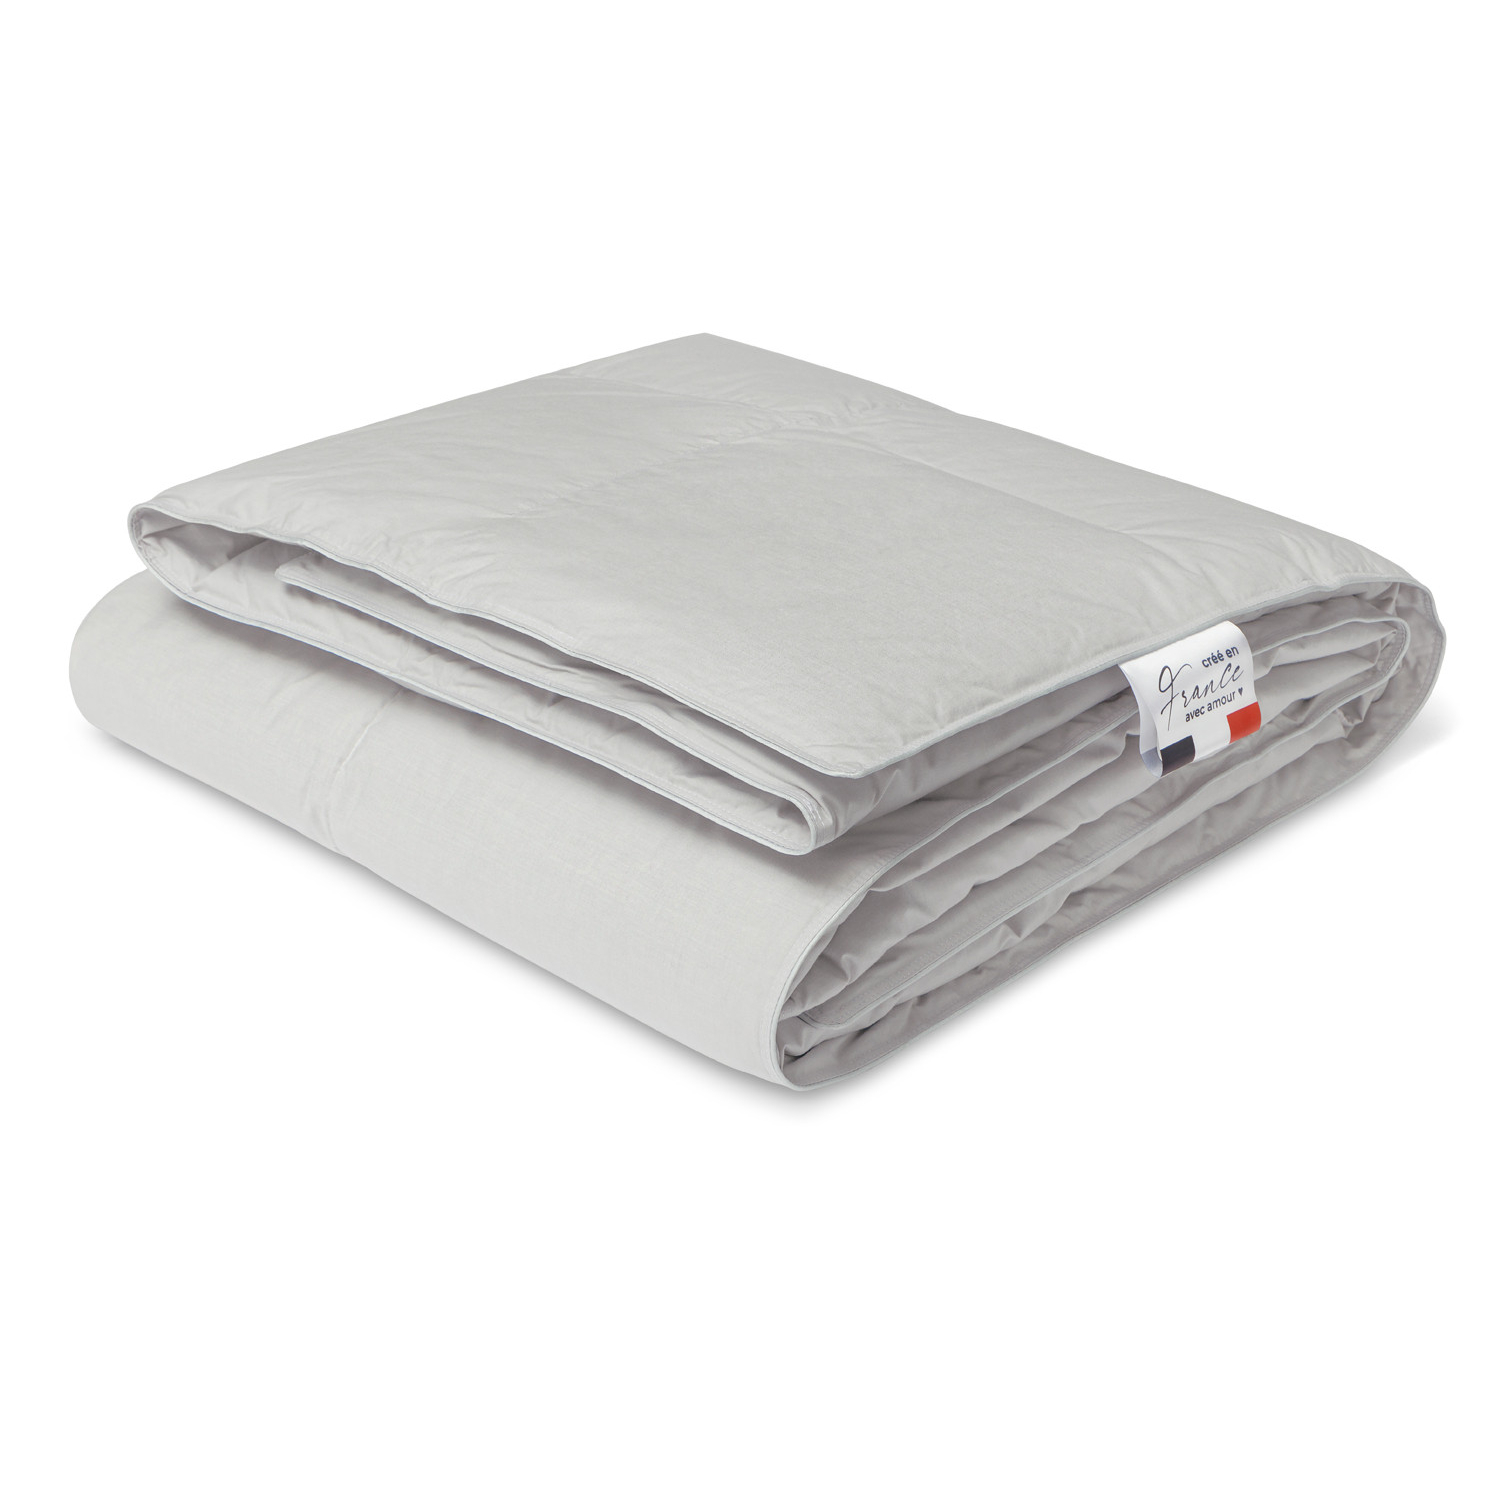 Пуховое одеяло Marc Anri Bretagne серое 200х220 см (МН2076), цвет серый - фото 1